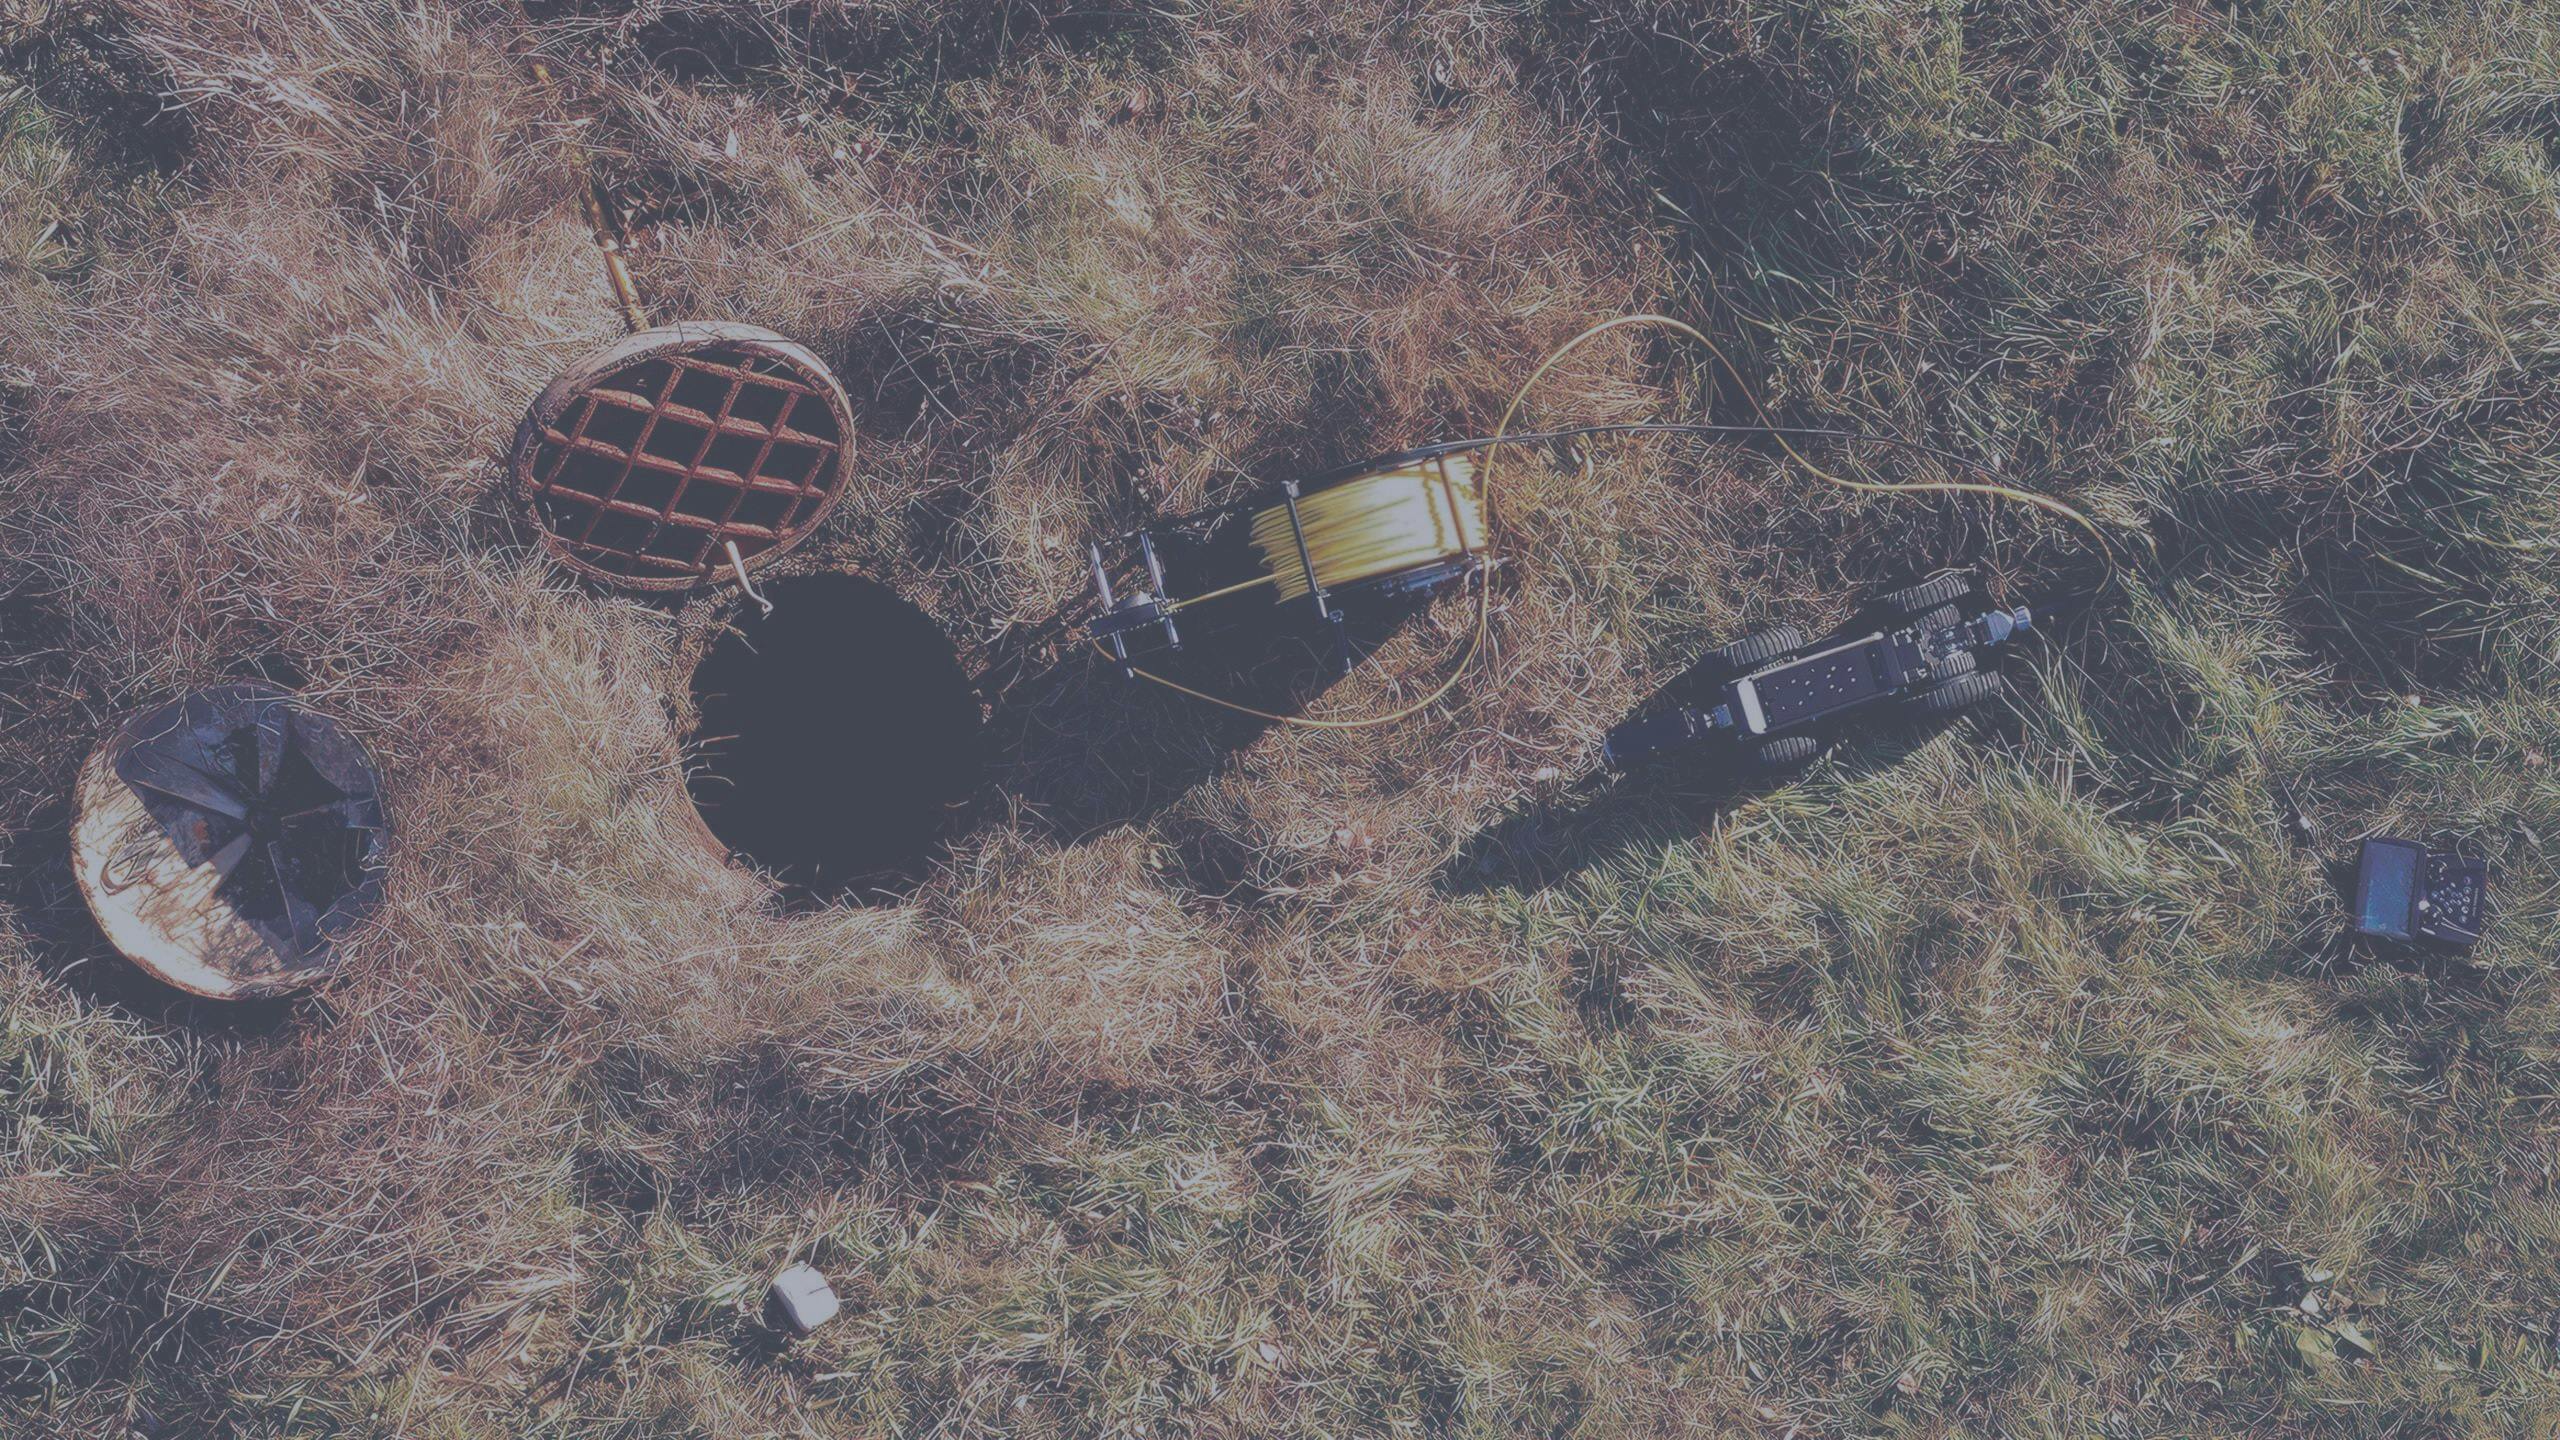 Pipe Crawler on a field beside manhole